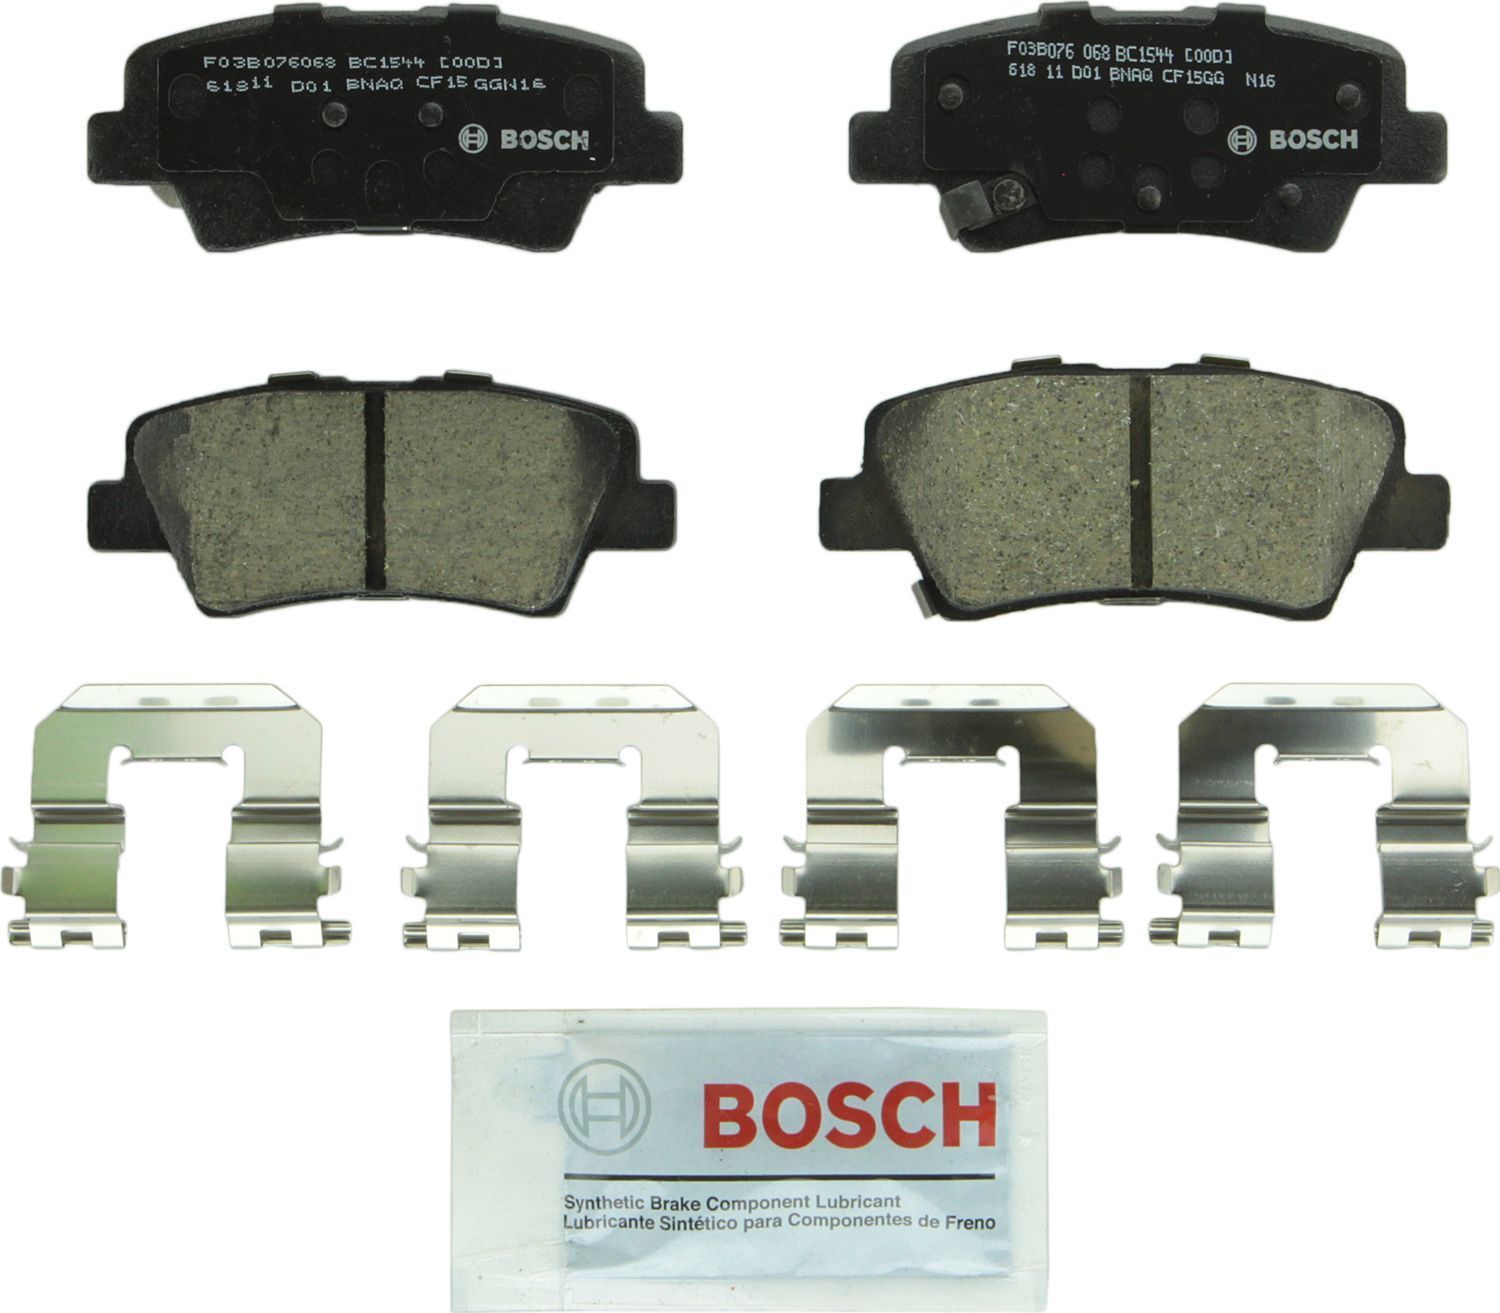 BOSCH BRAKE - Bosch QuietCast Brake Pad Ceramic Brake Pads (Rear) - BQC BC1544